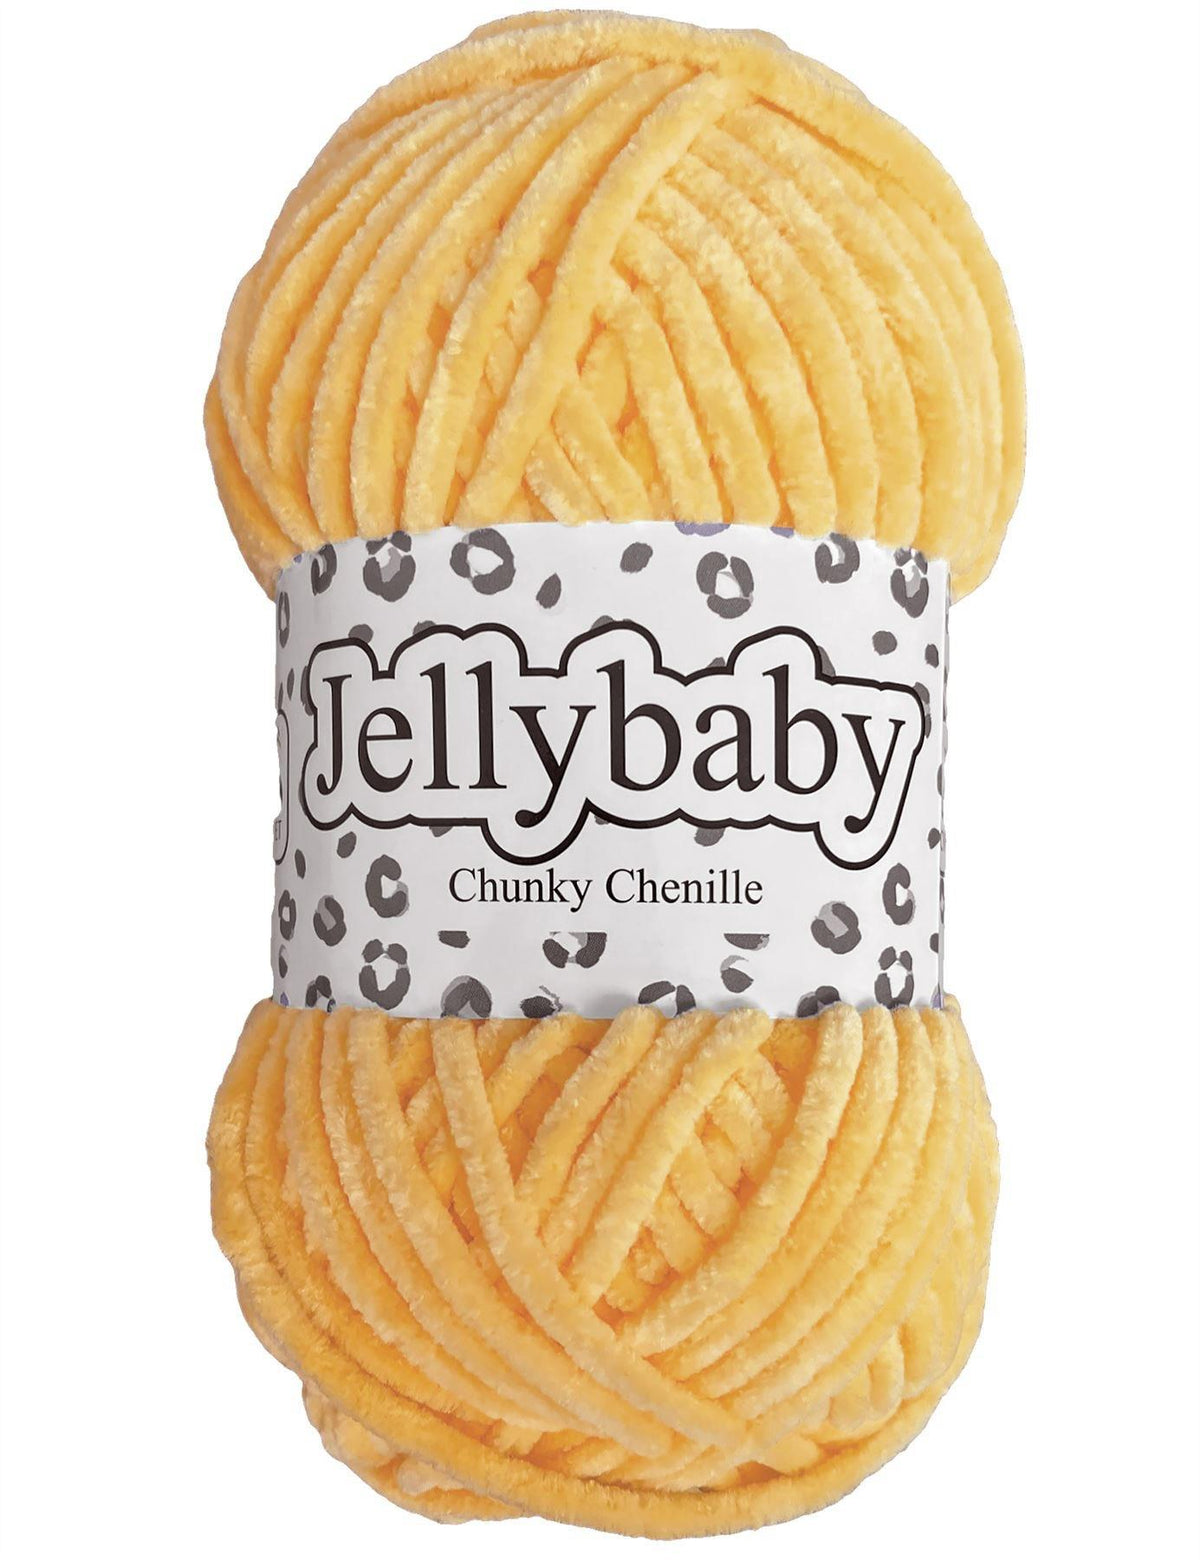 Buy Cygnet Jellybaby Chenille Chunky 100g Knitting Crochet Yarn Online in  India 